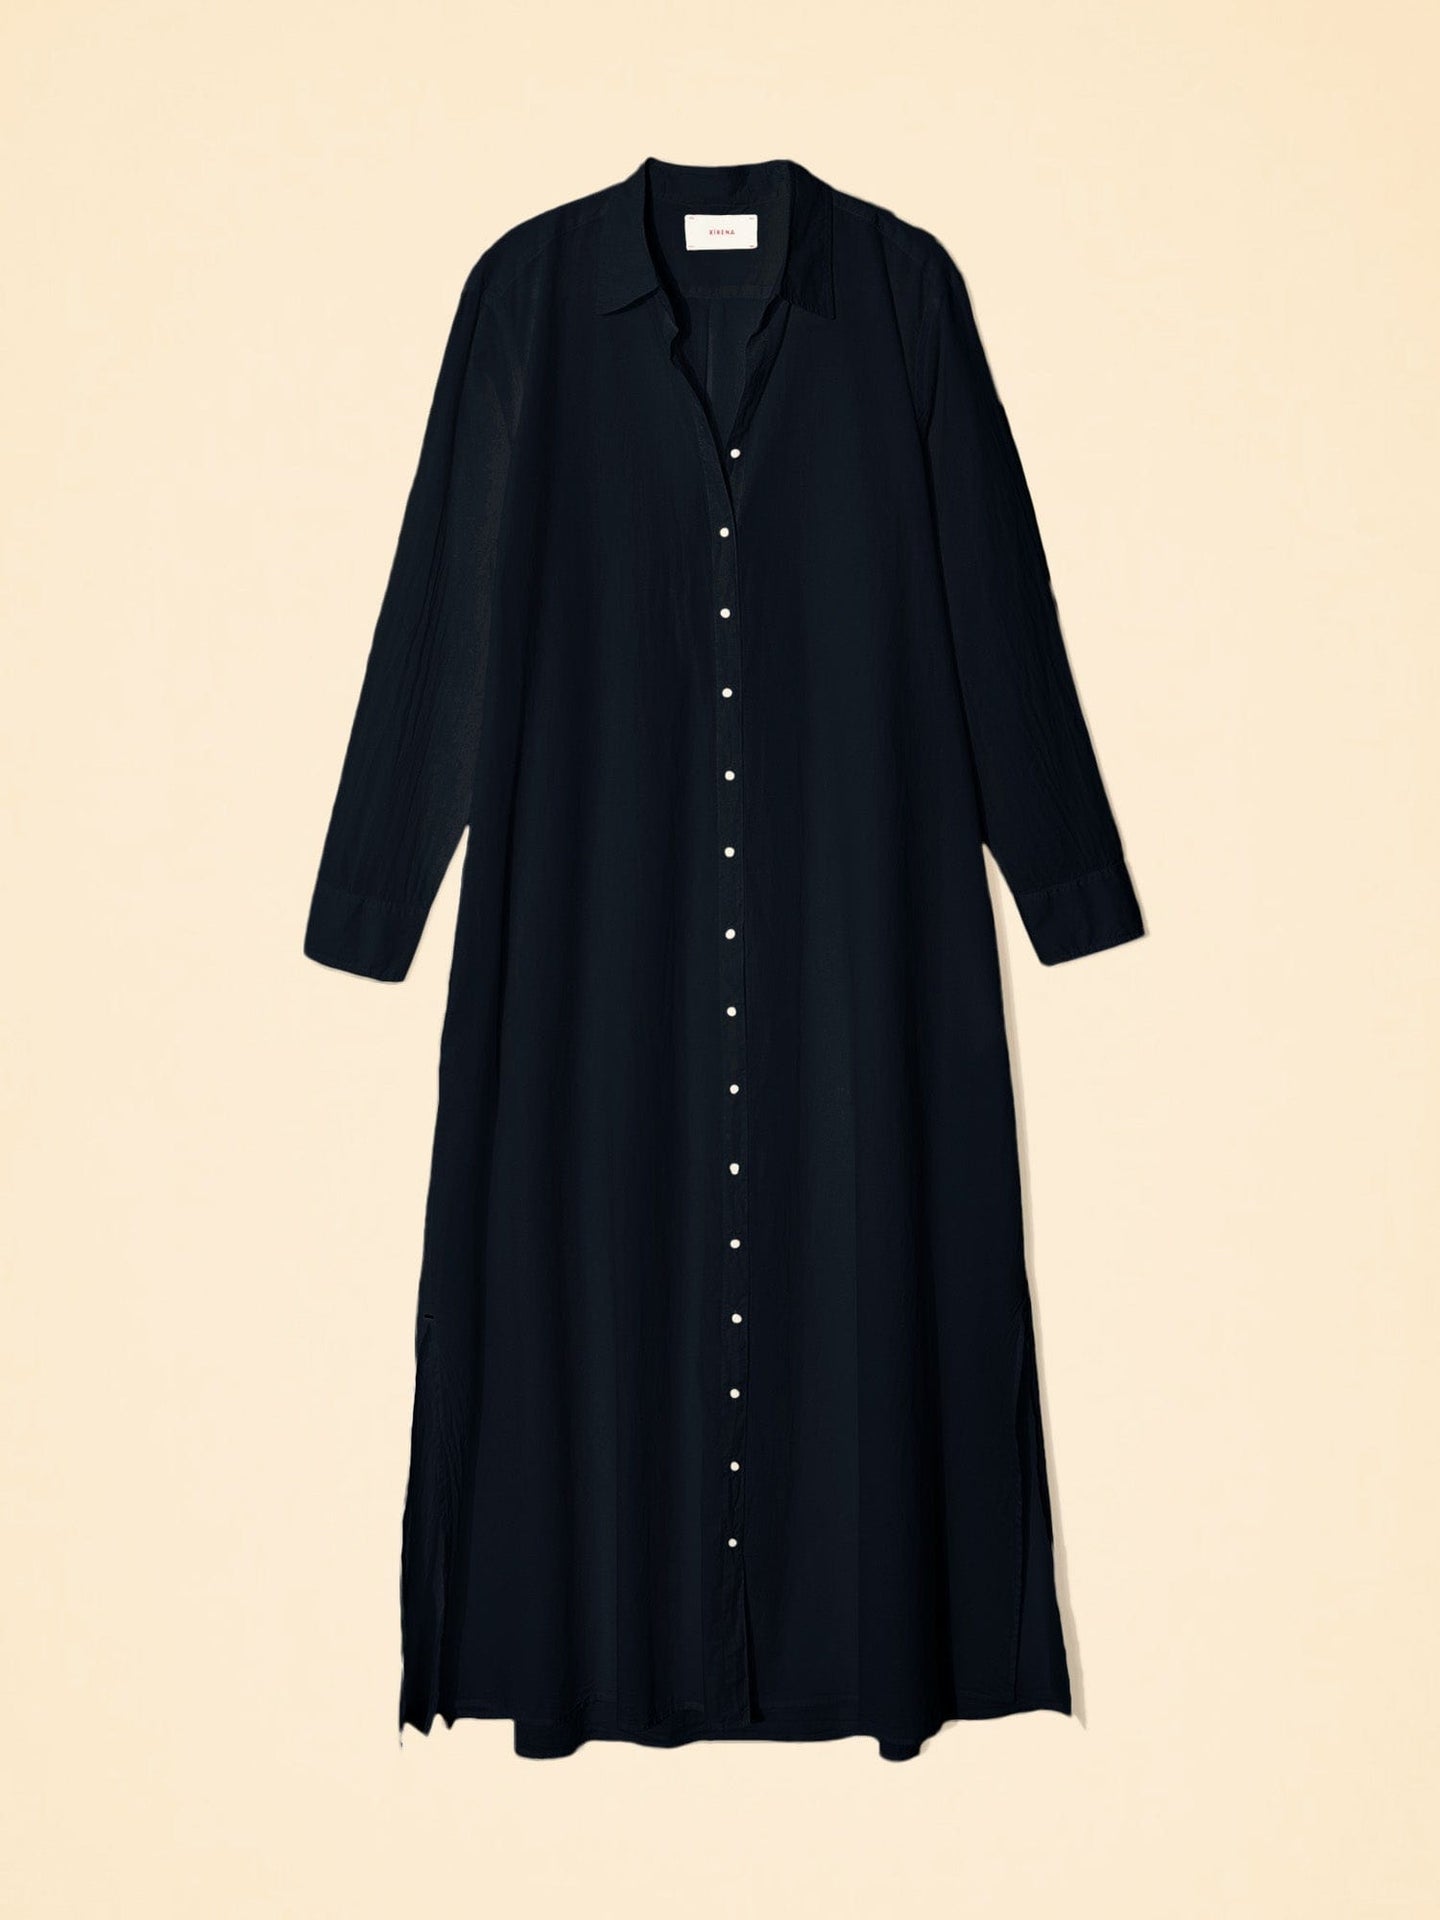 Xirena Dress Black Boden Dress